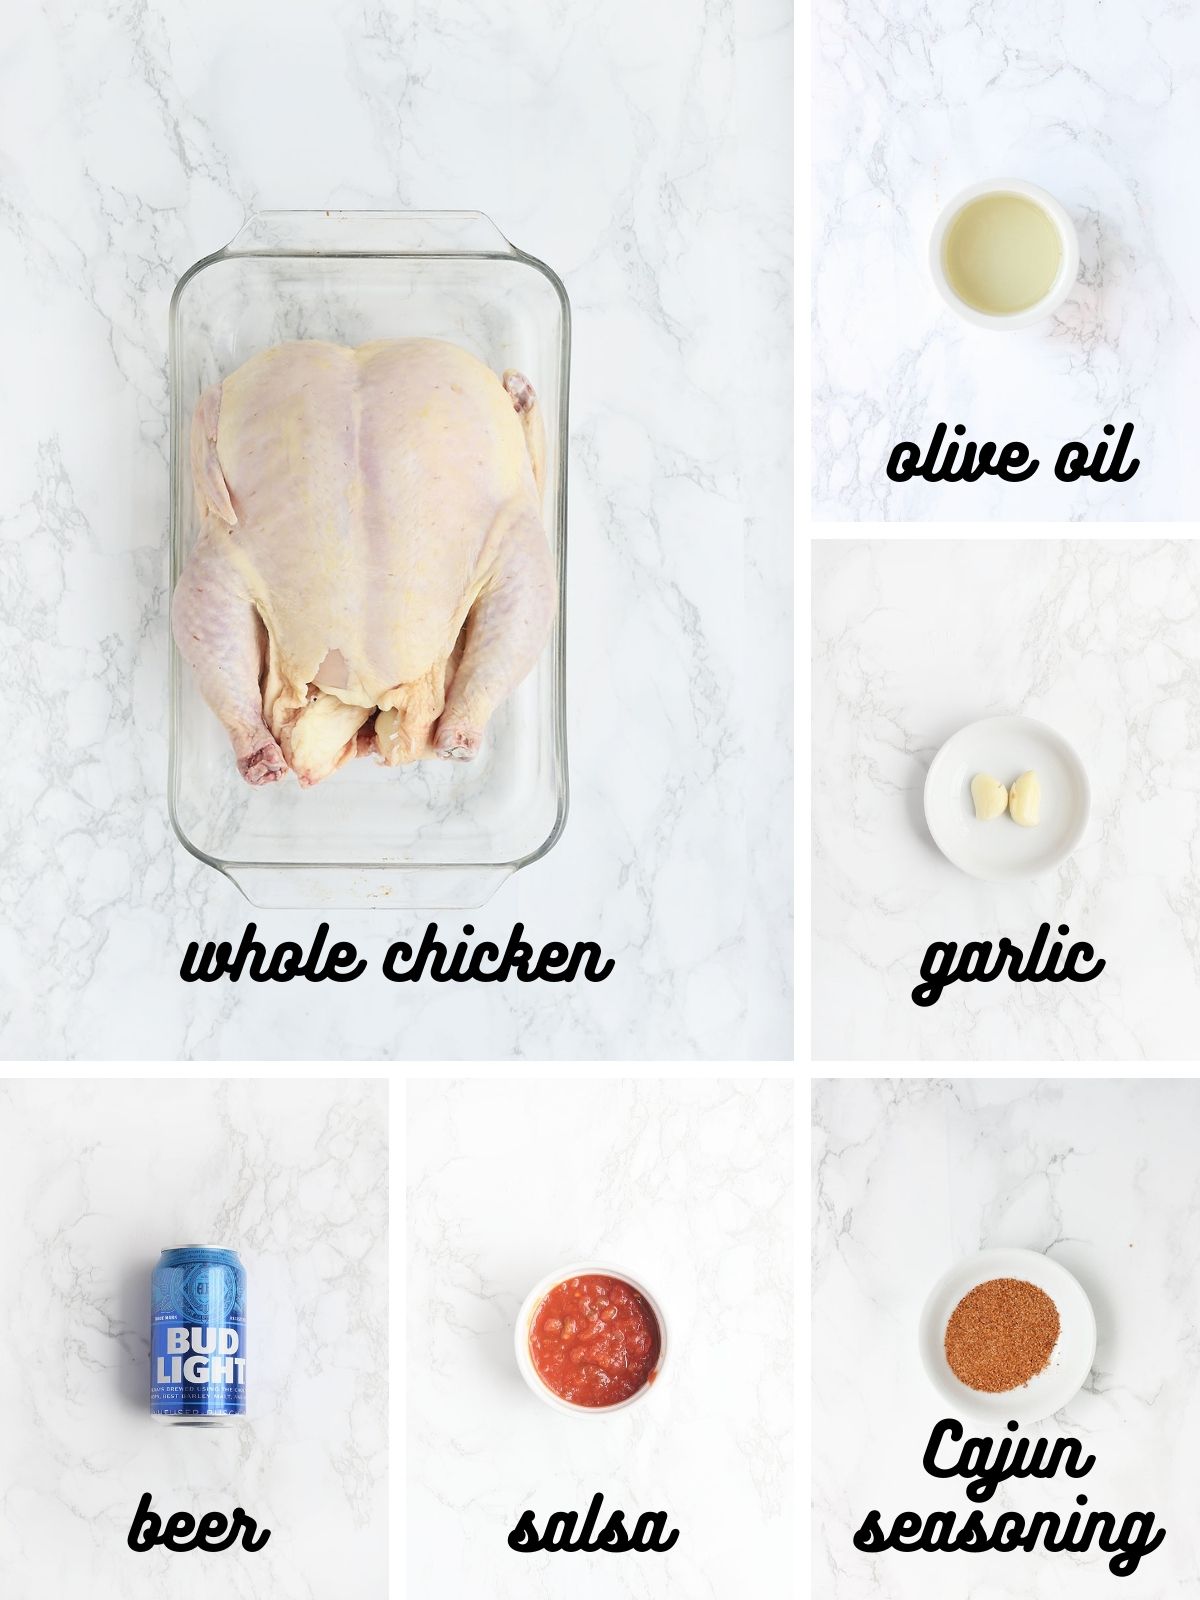 drunk chicken ingredients include a whole chicken, olive oil, garlic, beer, salsa, Cajun seasoning